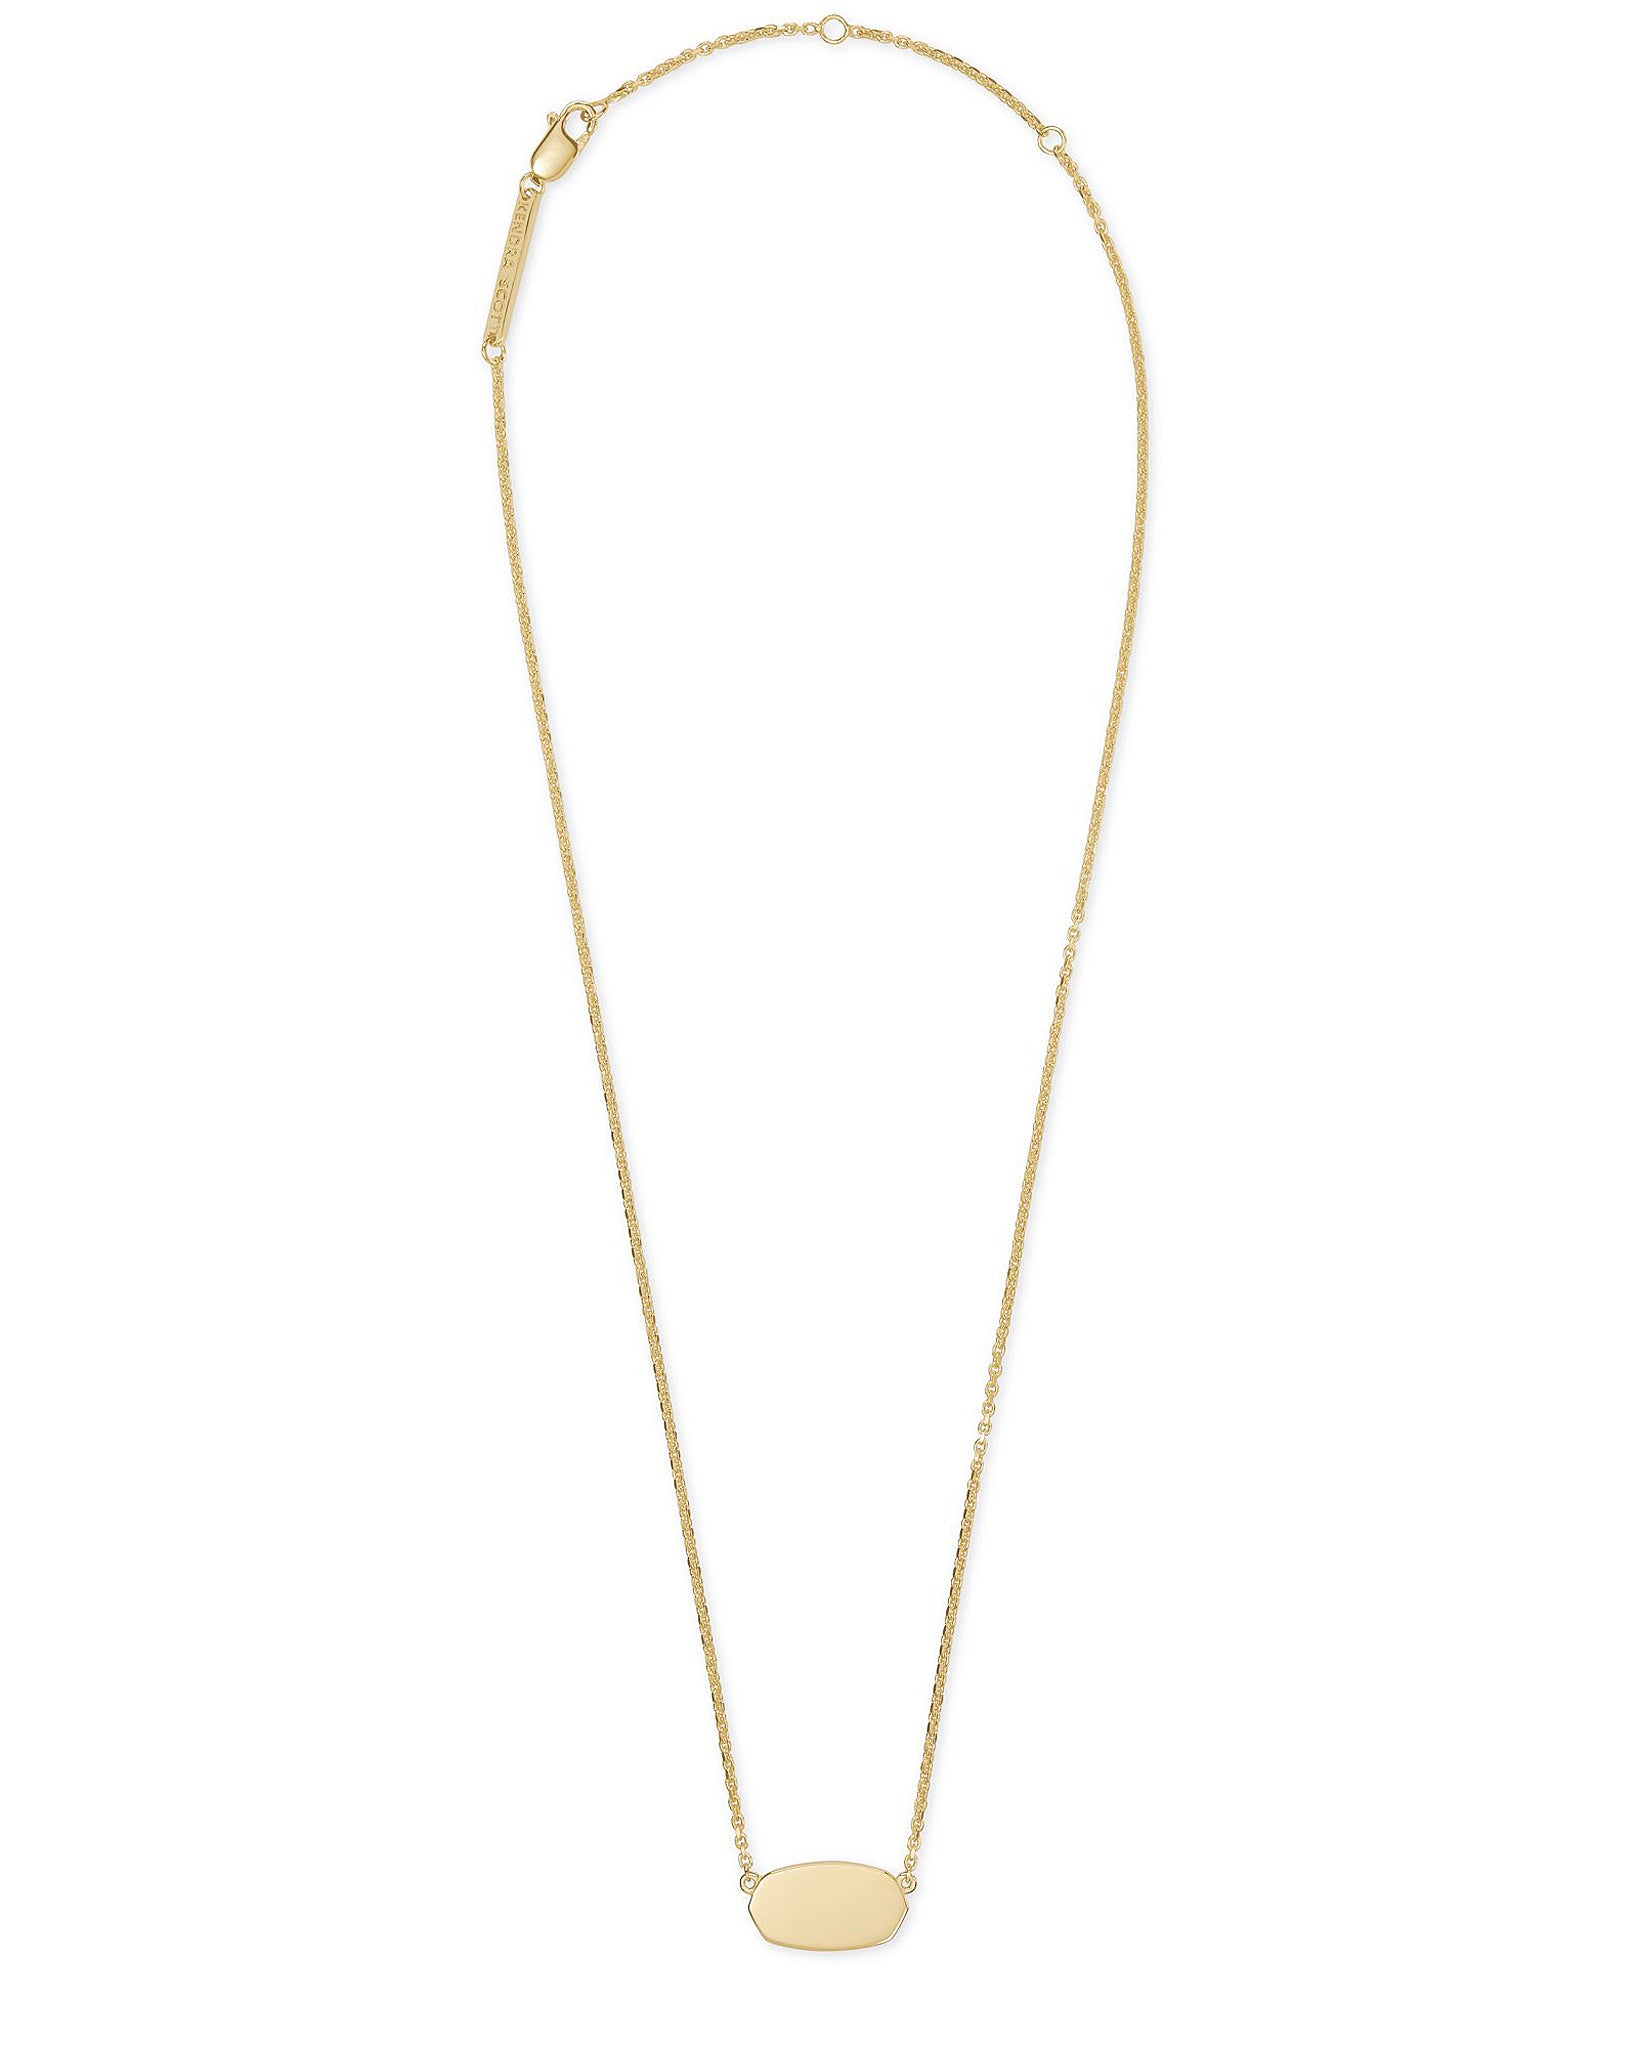 Kendra Scott Elisa Oval Pendant Necklace in 18k Gold Vermeil